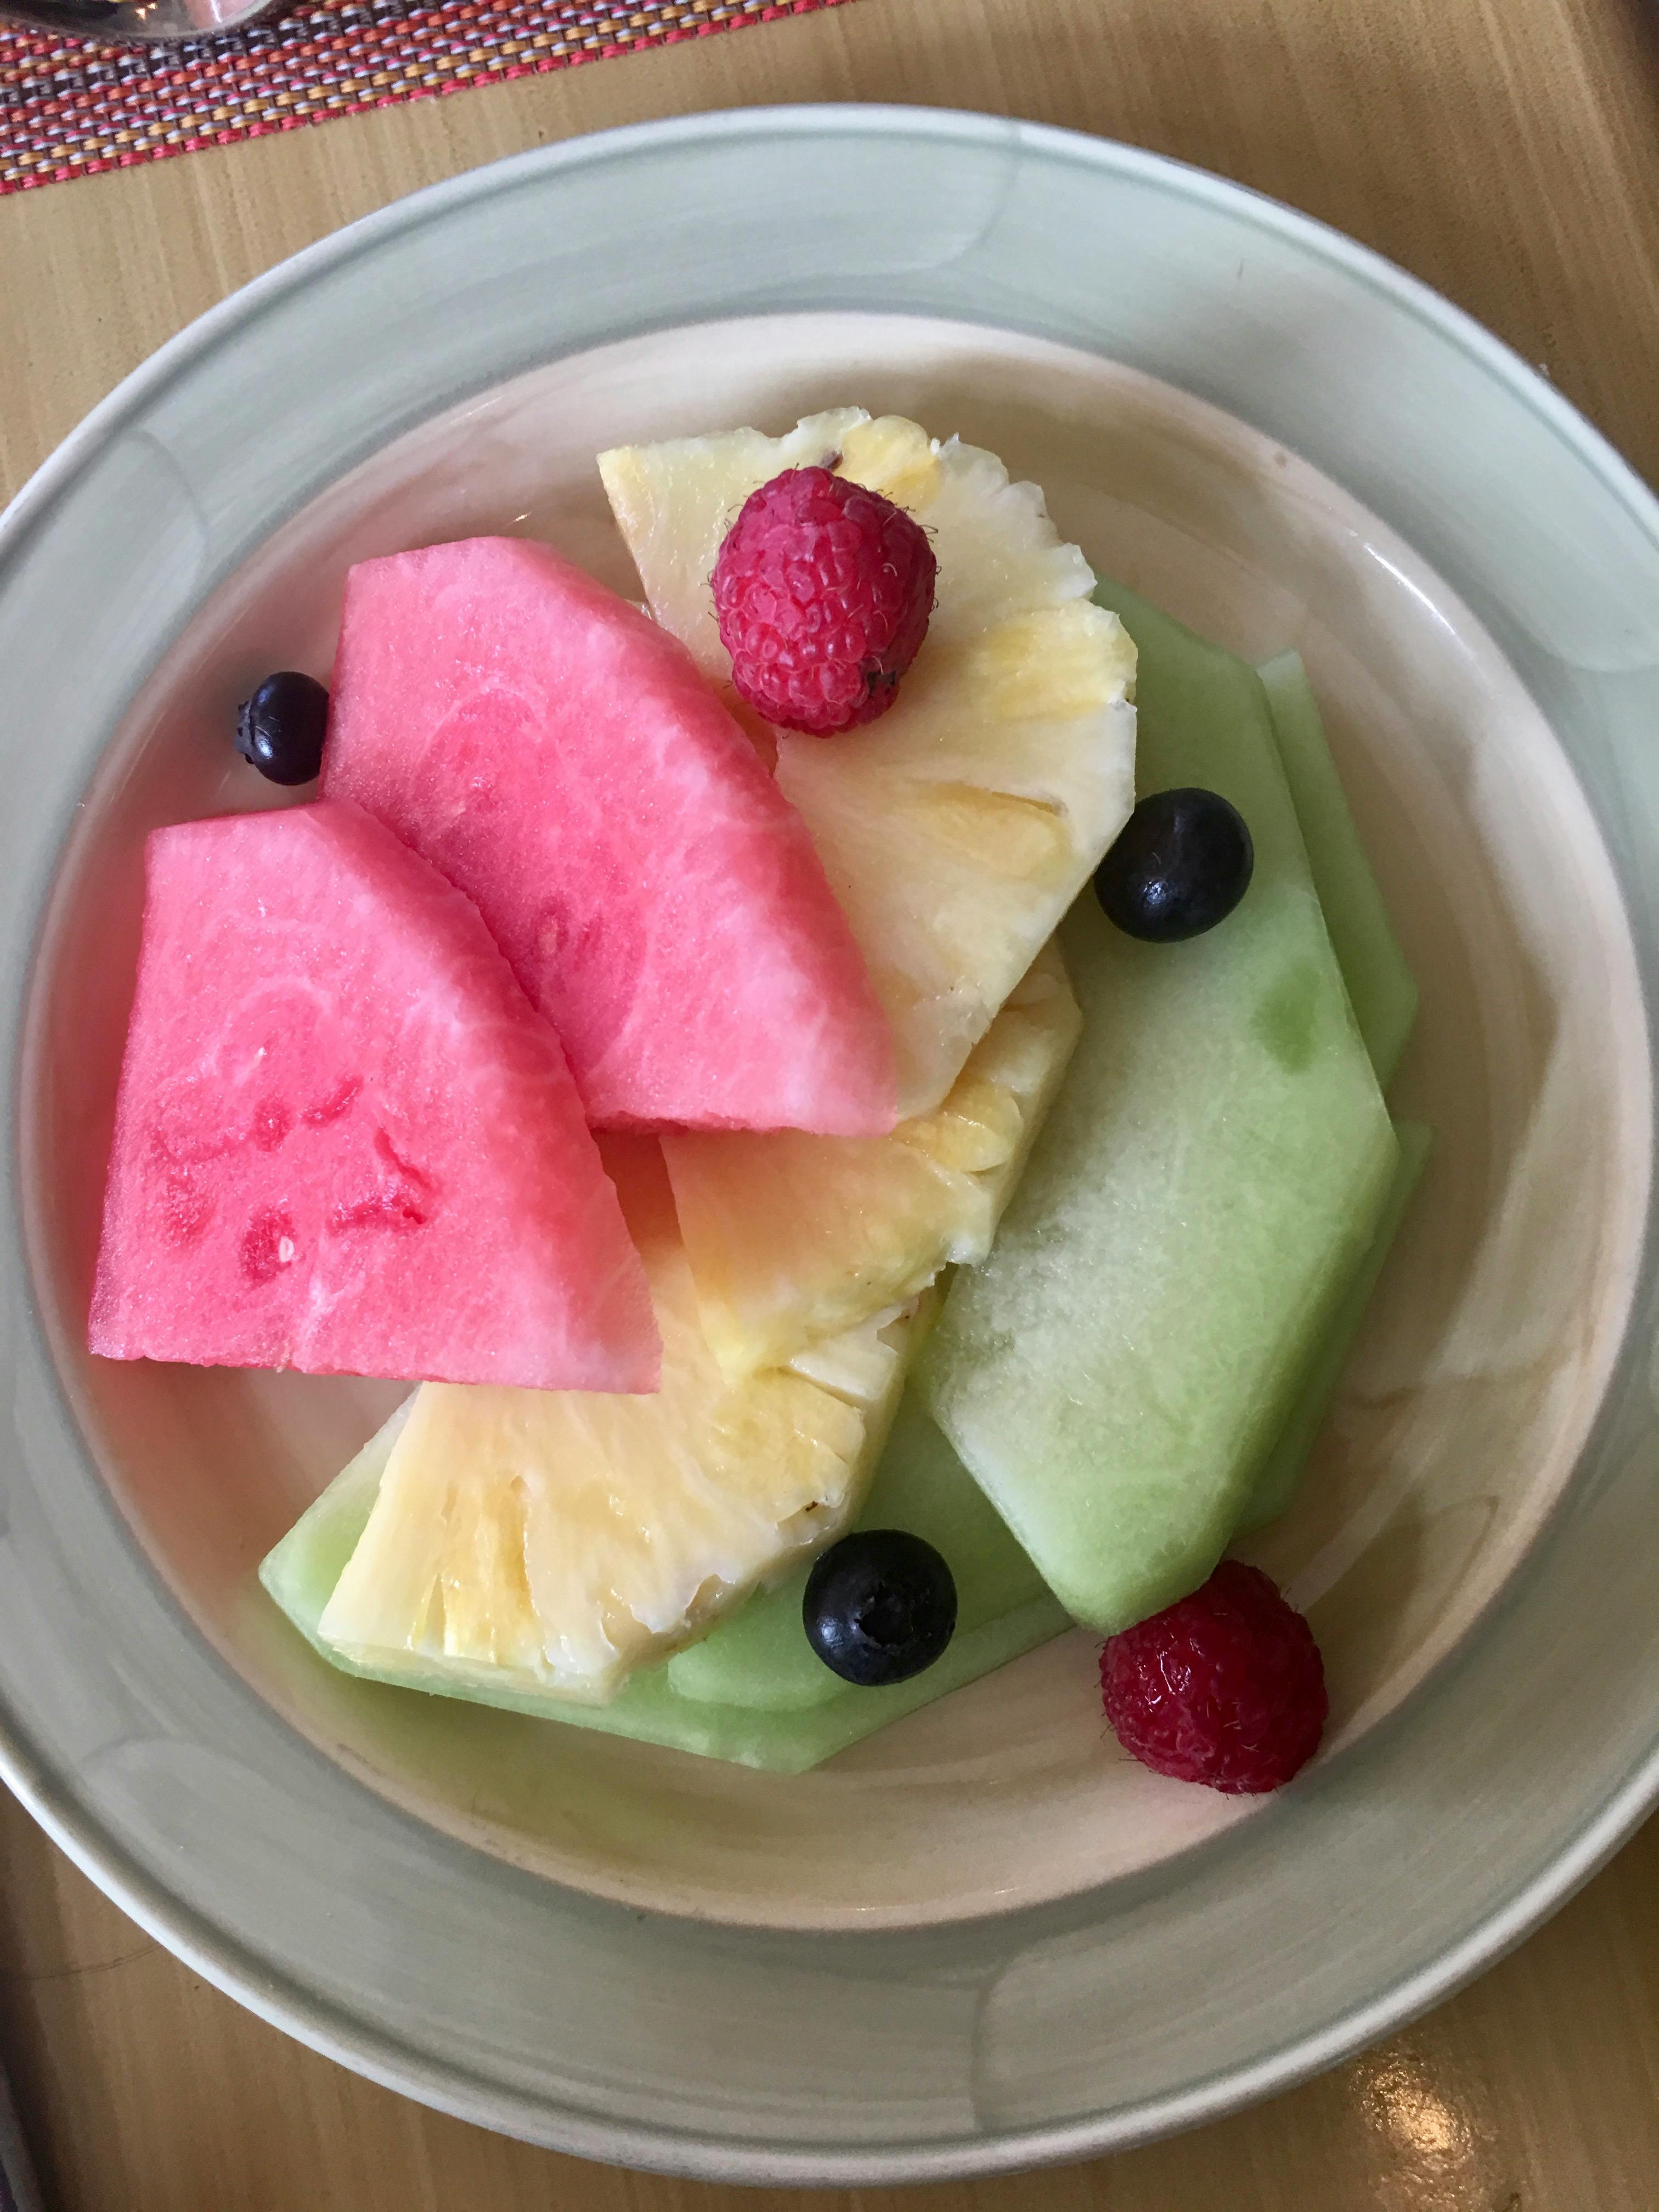 Free stock photo of fruit, fruit plate, pineapple